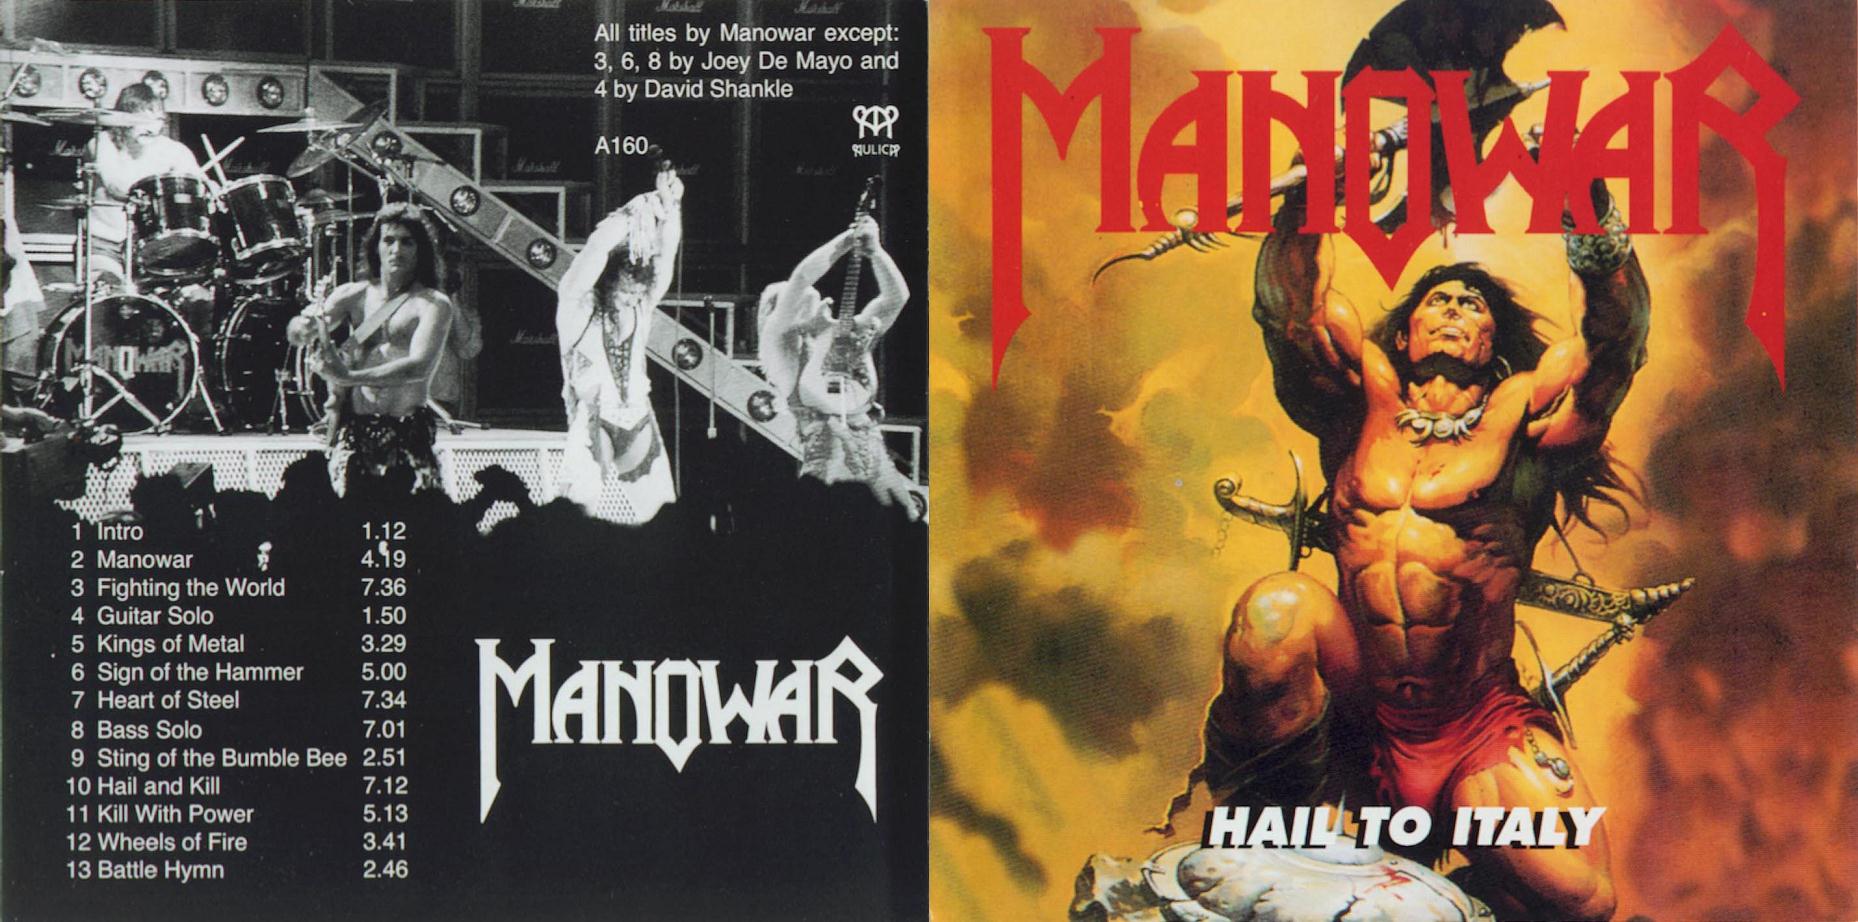 Manowar fight. Обложки дисков Manowar. Manowar обложка двд. Manowar 1992. Manowar Fighting the World обложка.